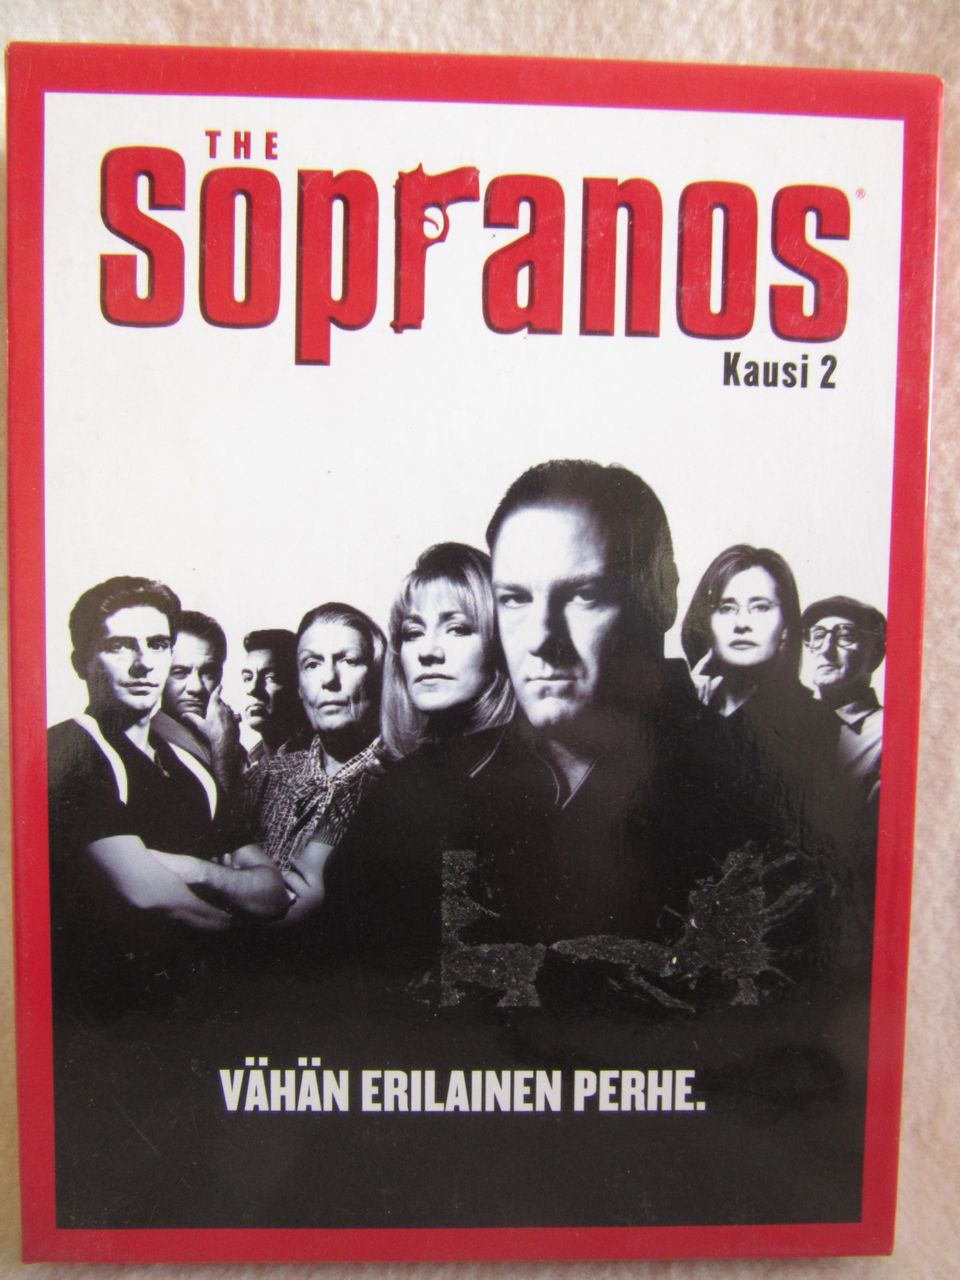 The Sopranos kausi 2 dvd